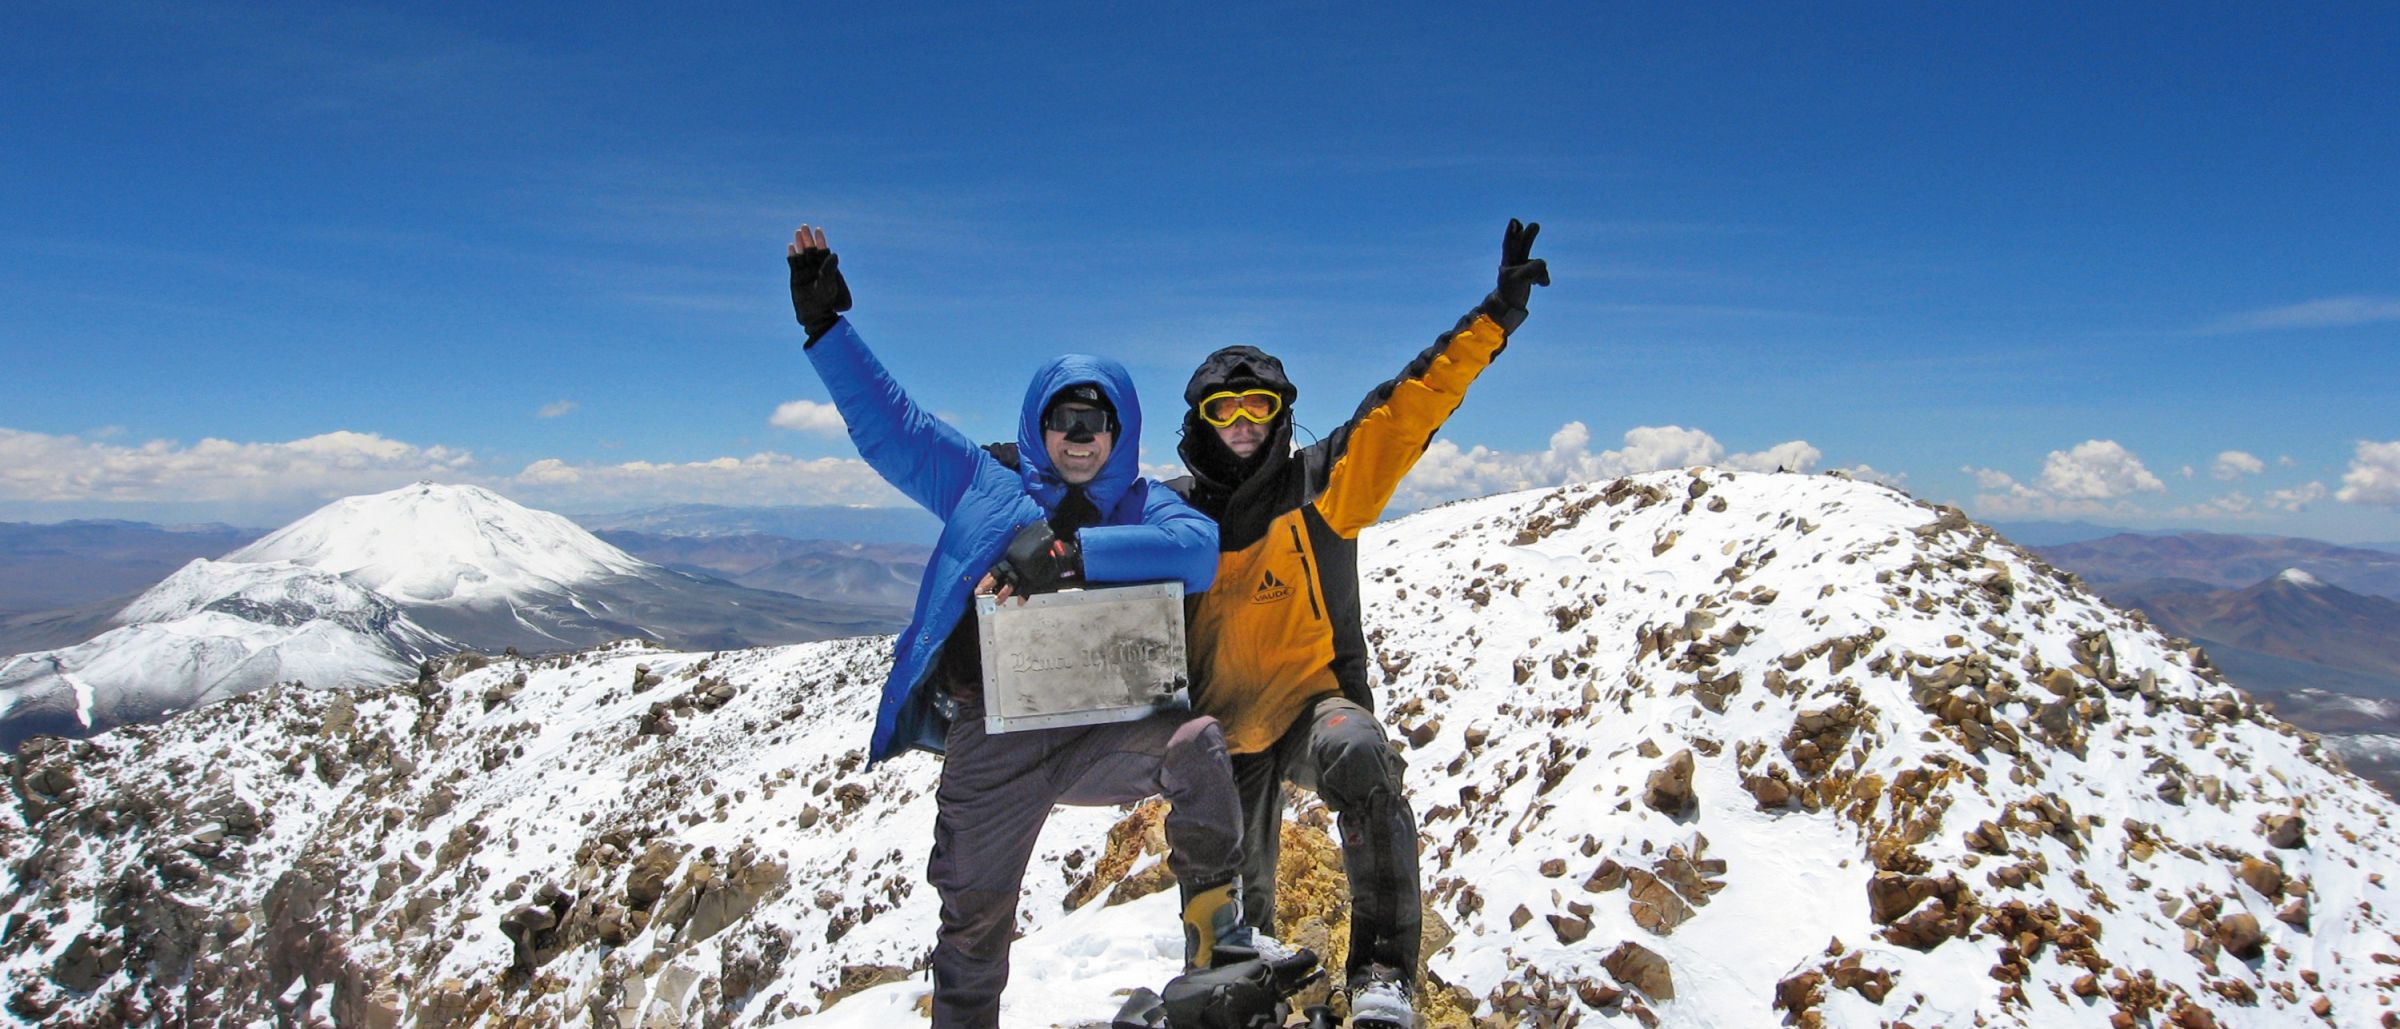 Höchste Glücksgefühle auf dem Gipfel des Ojos del Salado, 6893 m.